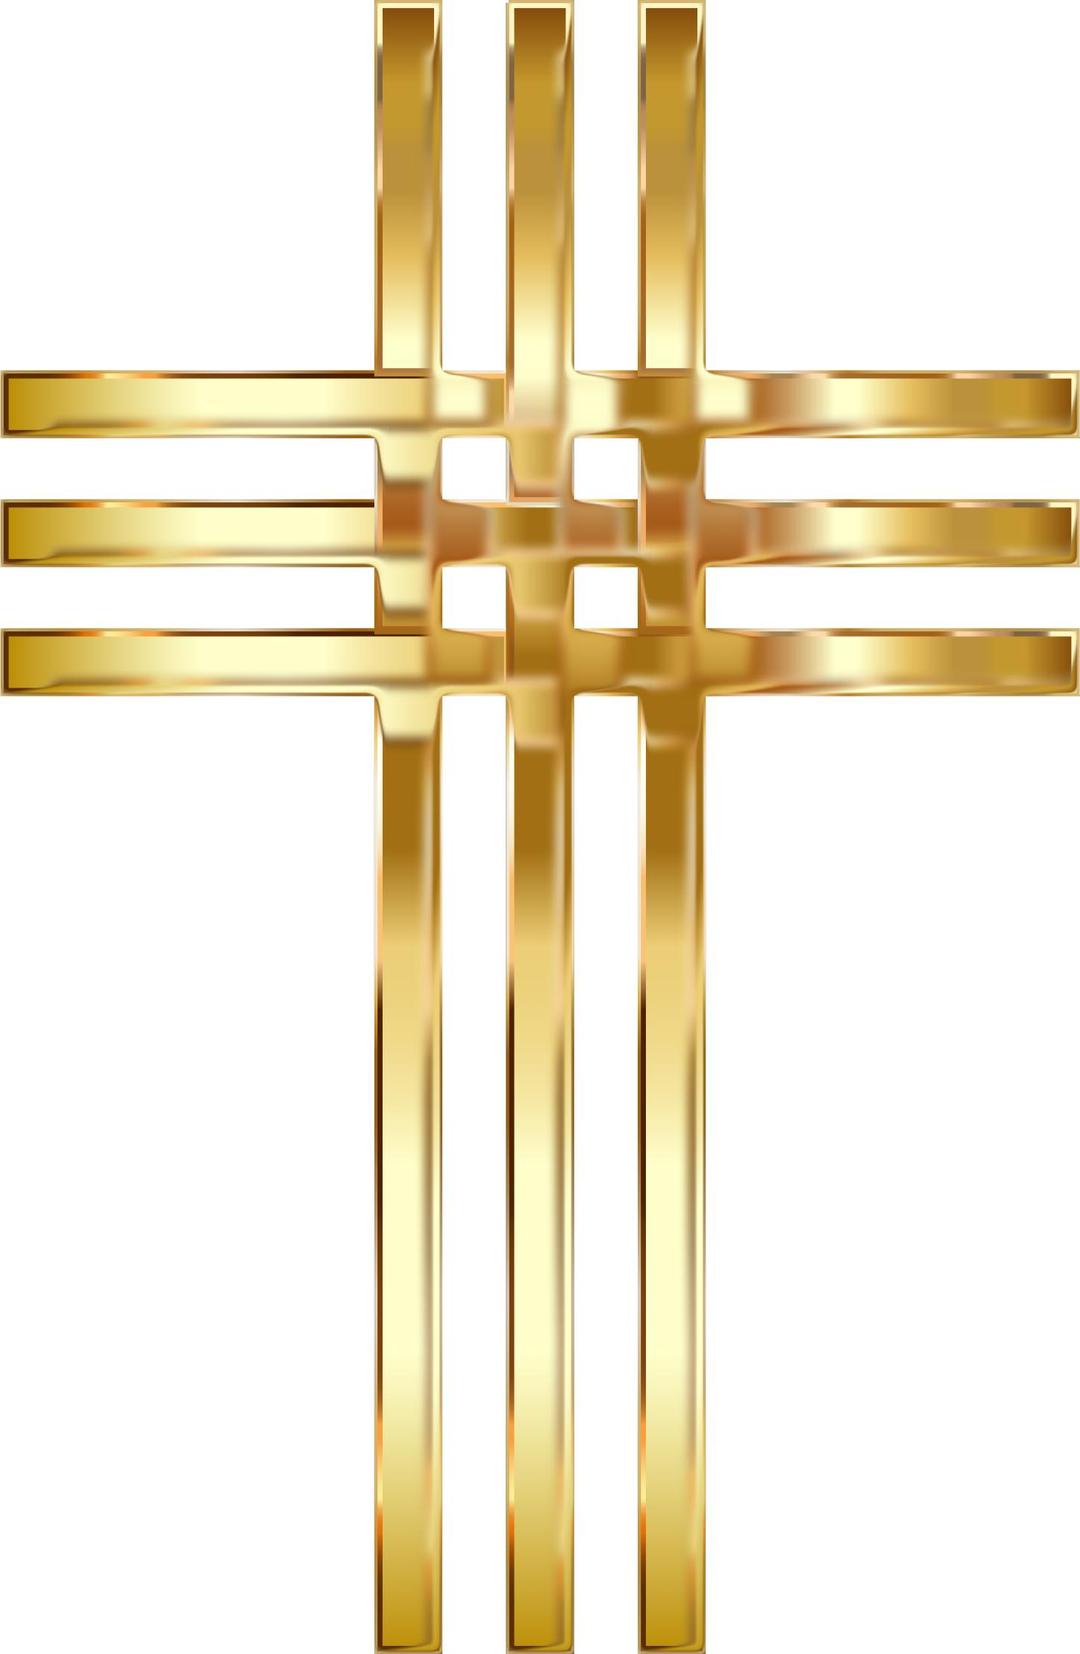 Interlocked Stylized Golden Cross Enhanced No Background png transparent